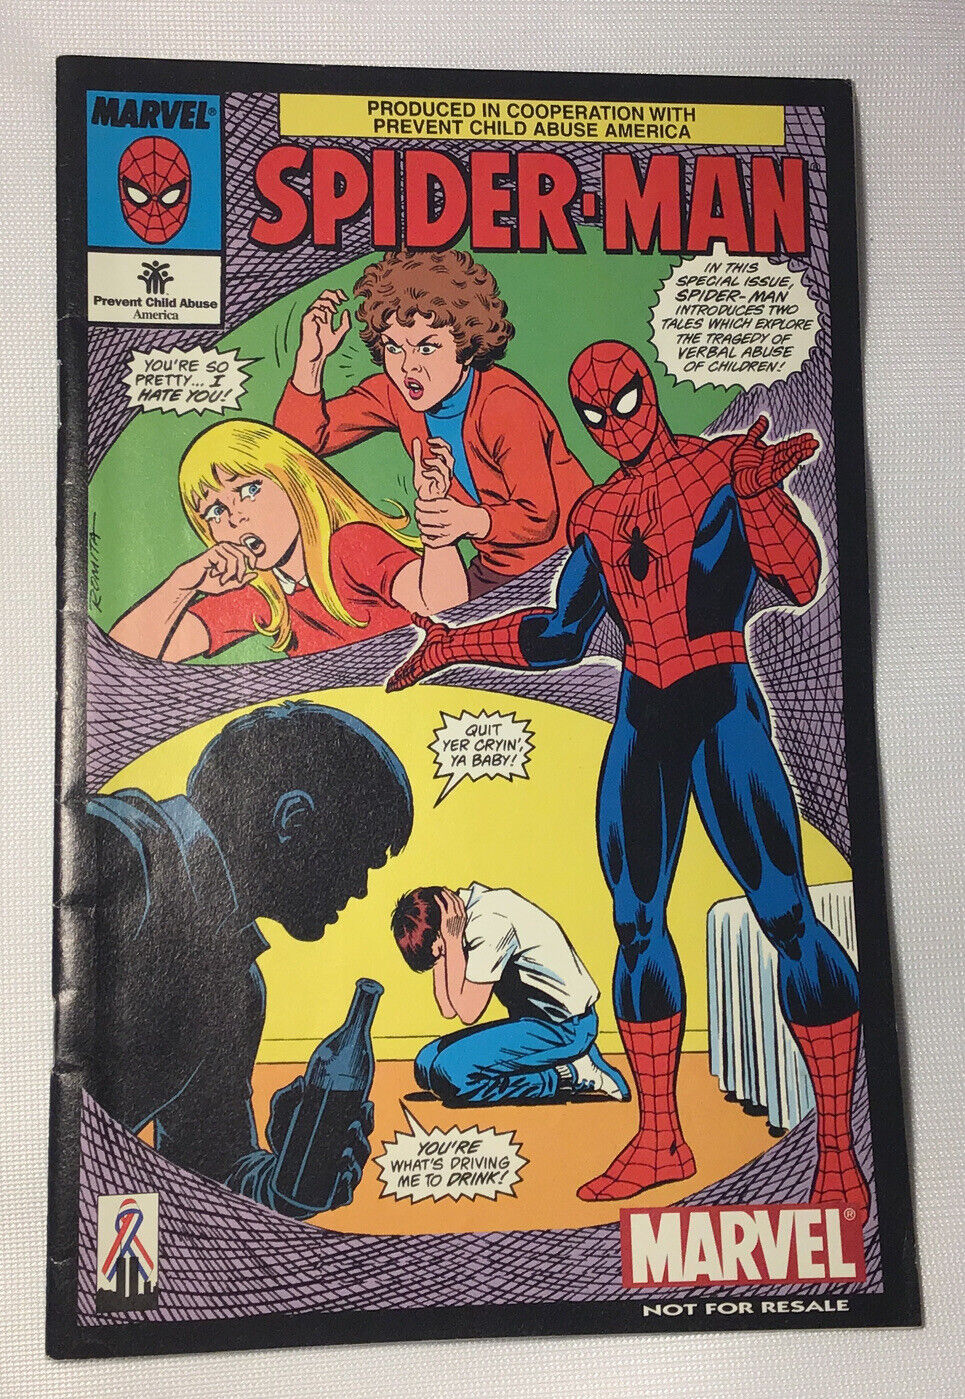 Spider-Man * Prevent Child Verbal Abuse #1 Variant * Marvel 1995  NOT FOR RESALE